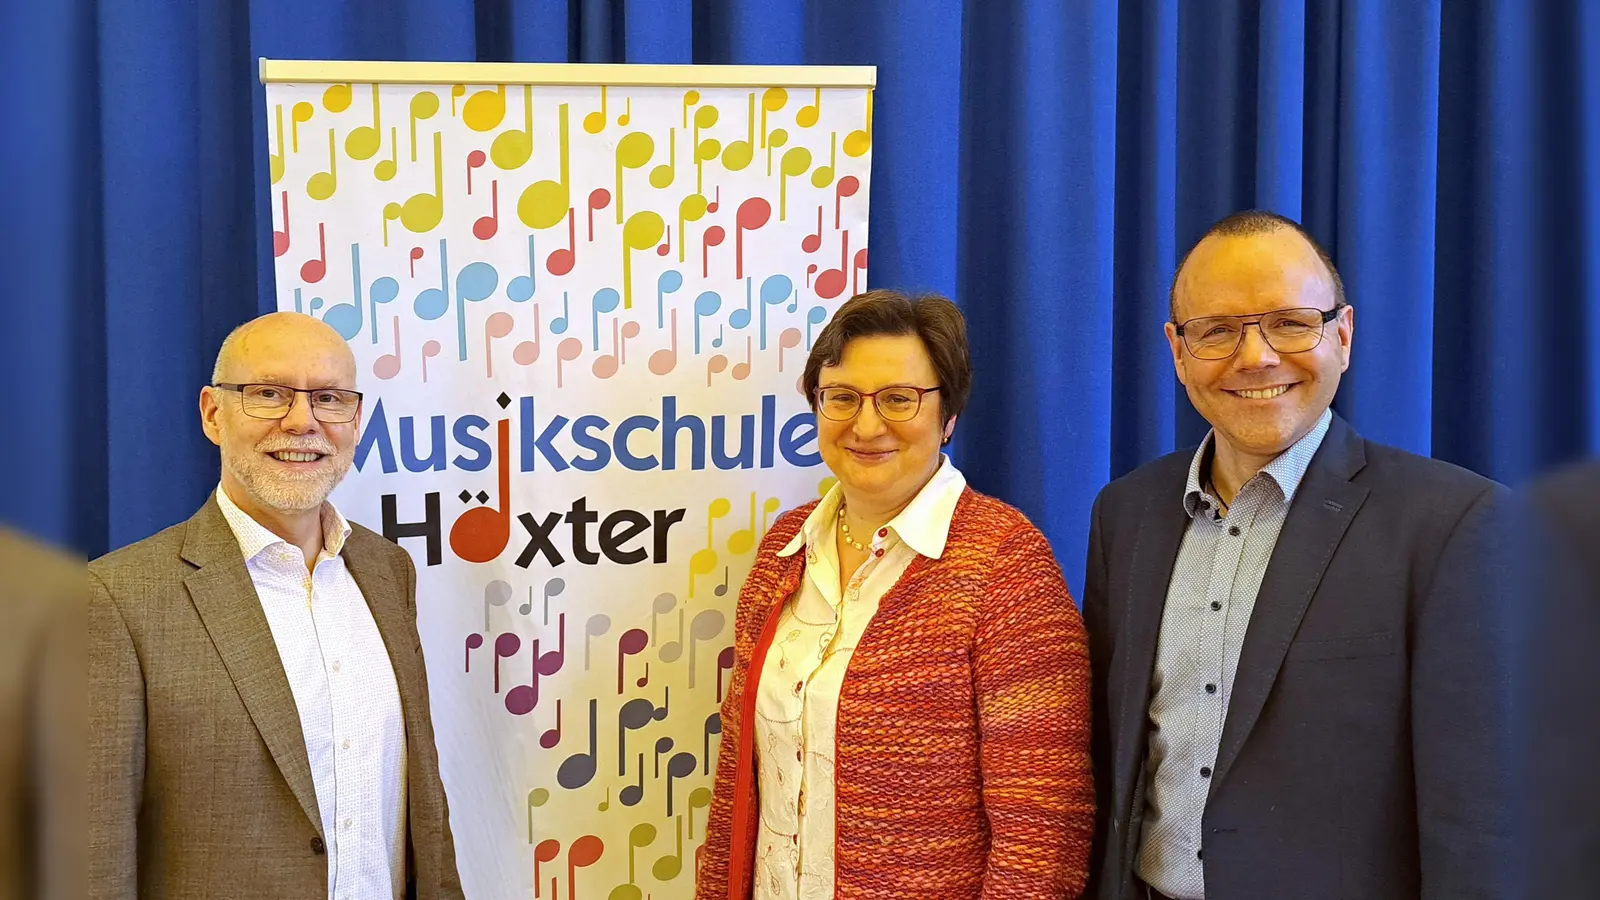 Die Hauptakteure (v.l.): Falk Orban (1. Vorsitzender), Klaudia Knapp (Leiterin Musikschule Höxter) und Joachim Quadflieg (2. Vorsitzender). (Foto: privat)